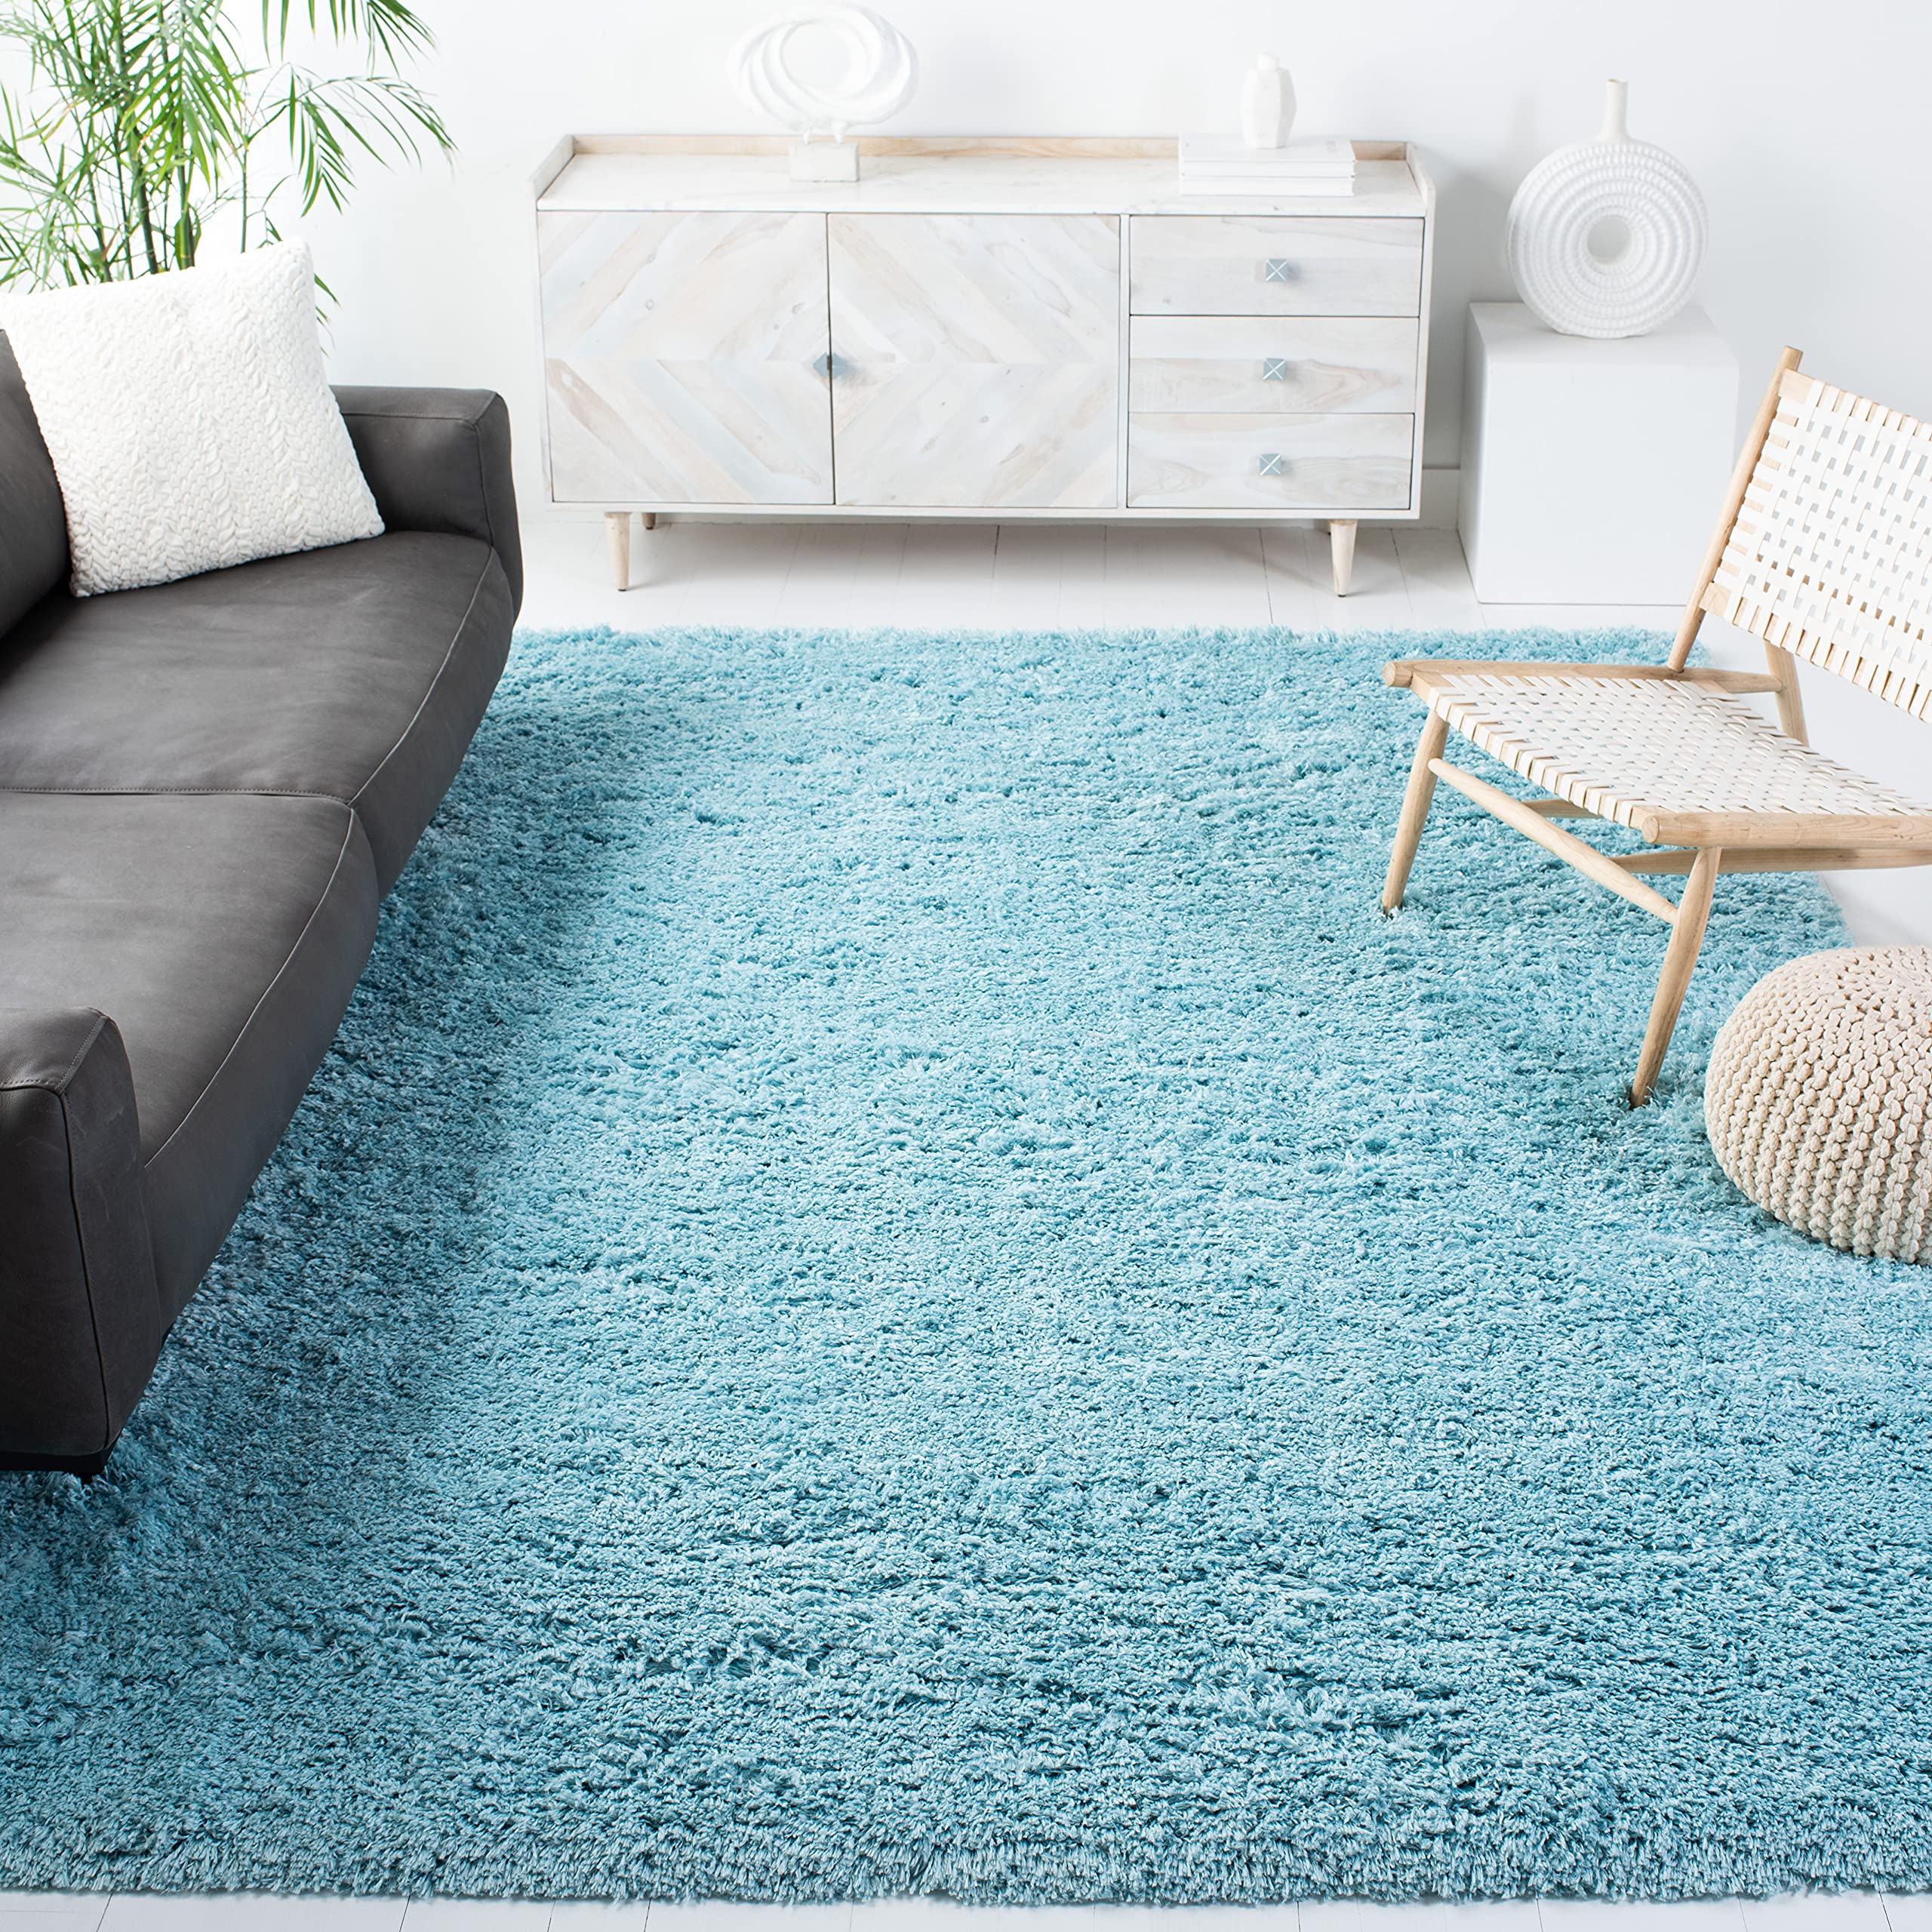  Safavieh Polar Shag 系列小地毯 - 9 英寸 x 12 英寸，浅绿松石色，纯色迷人设计，不脱落且易于护理，3 英寸厚，非常适合客厅、卧室中人流较多的区域 (PSG800T)...